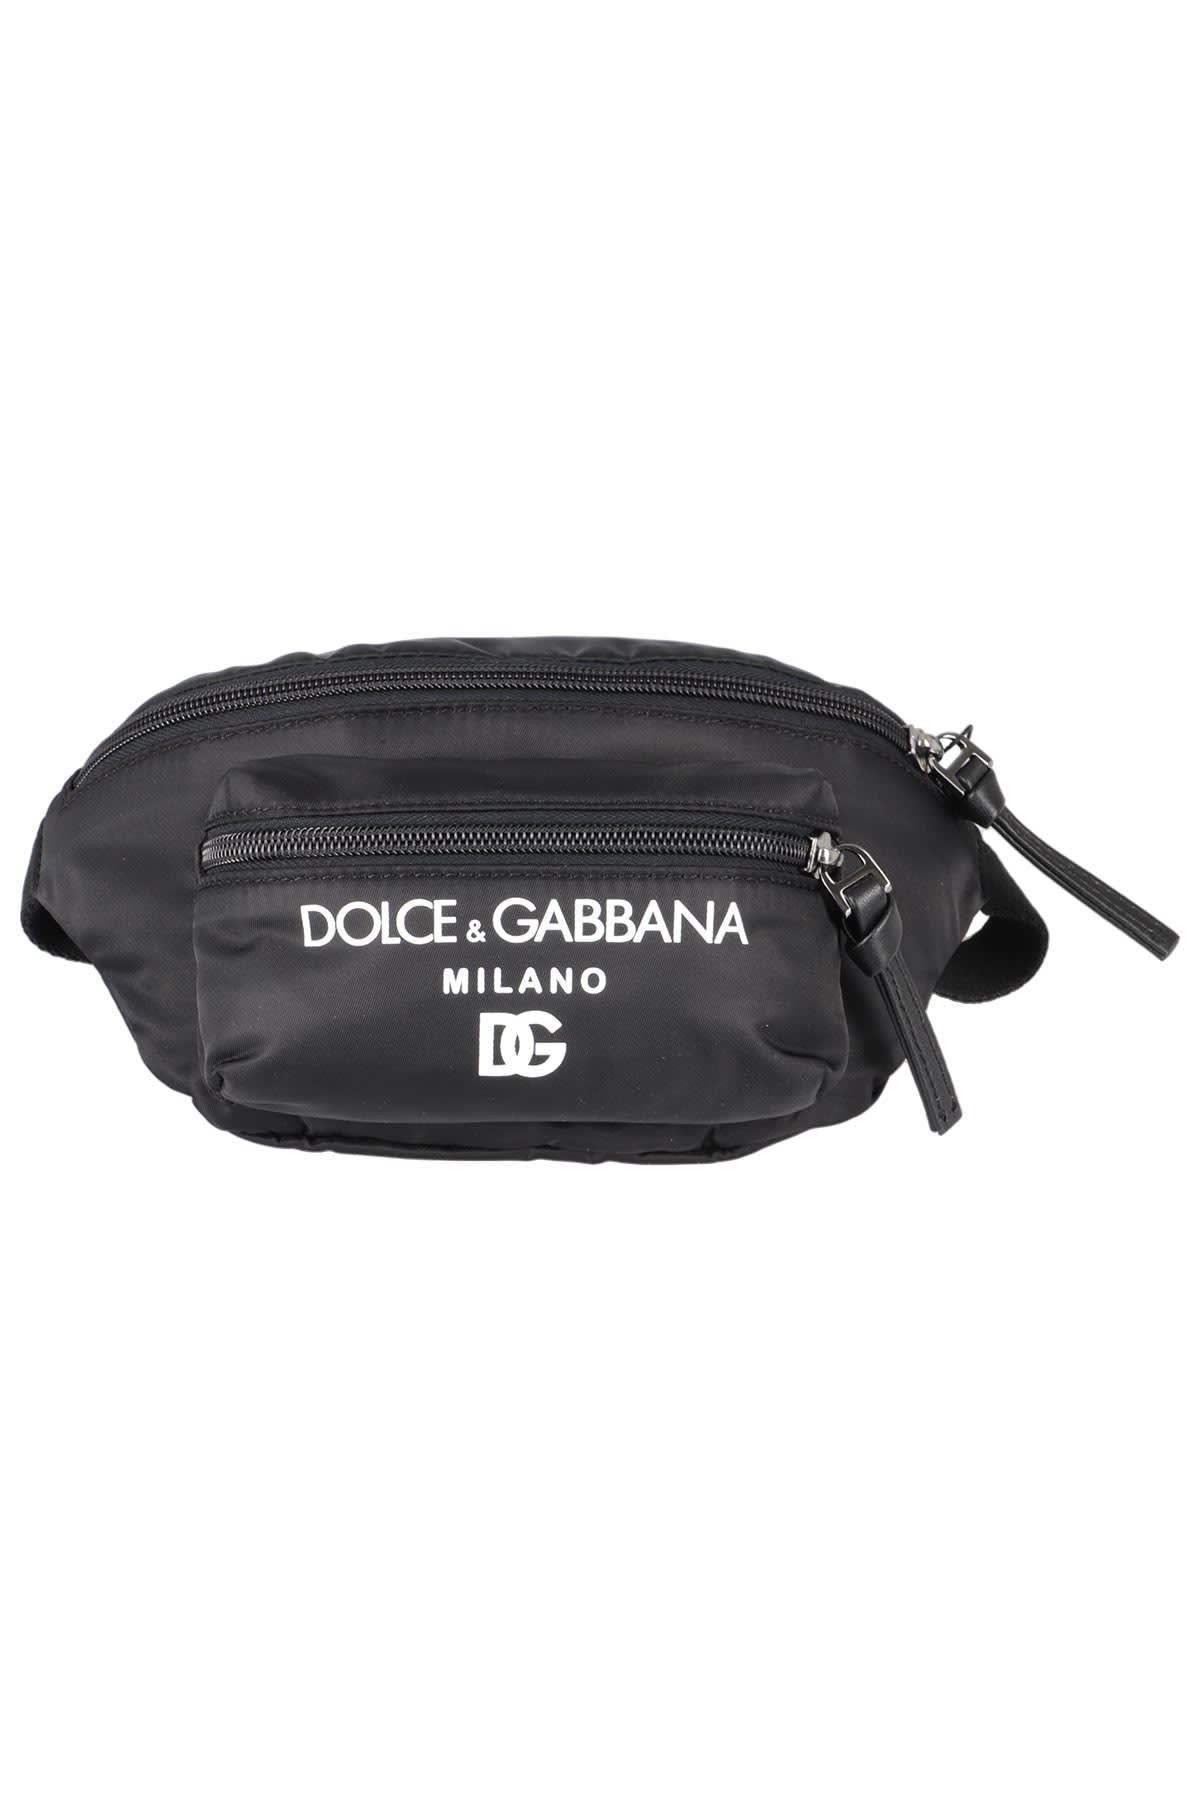 Dolce & Gabbana Marsupio Nylon